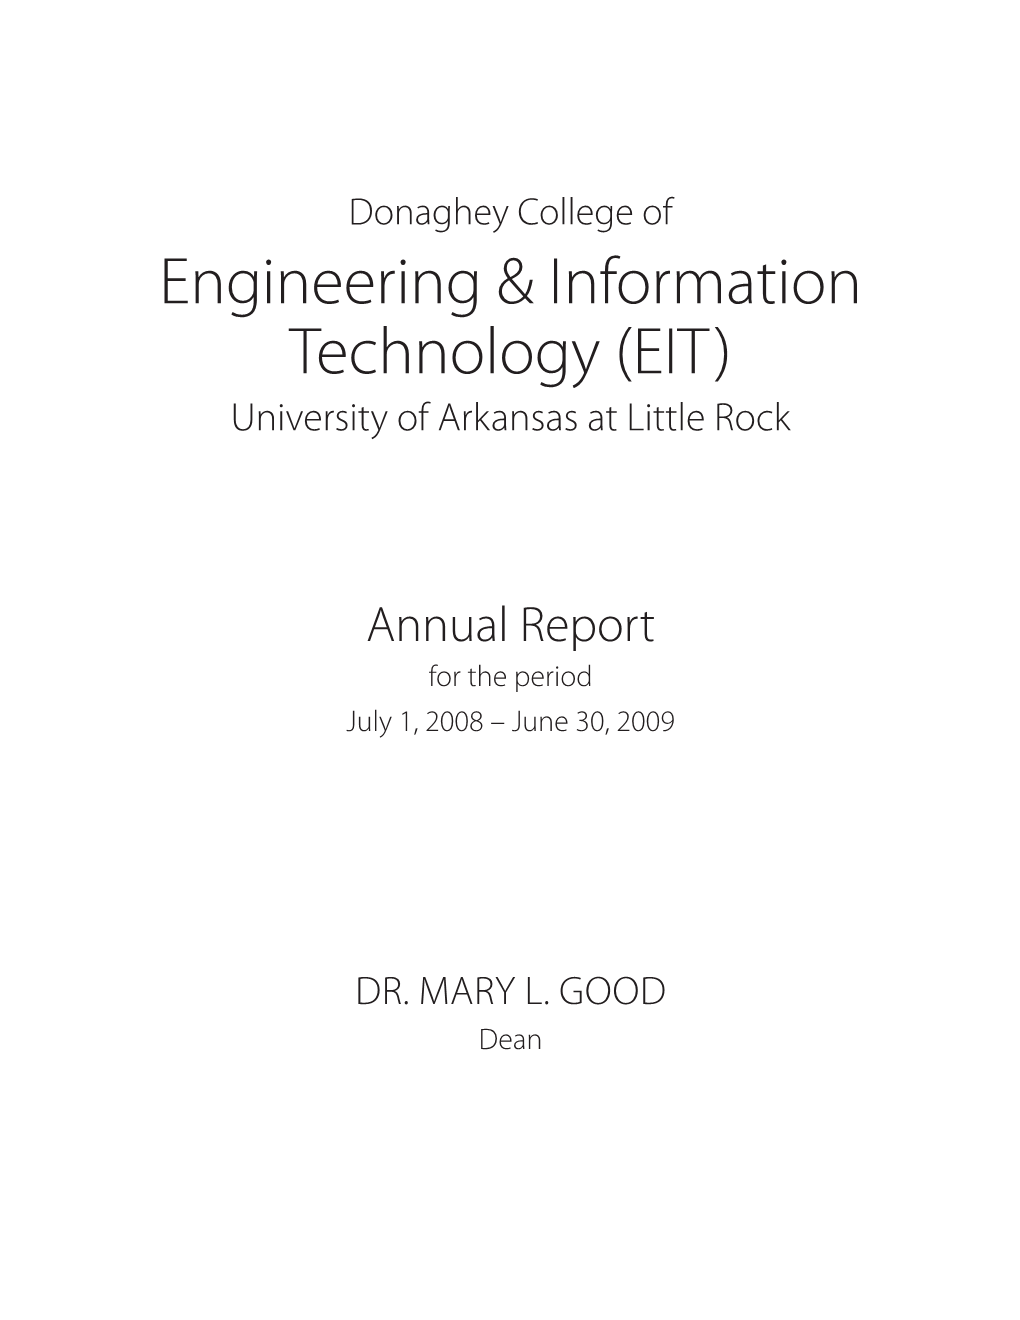 Engineering & Information Technology (EIT)